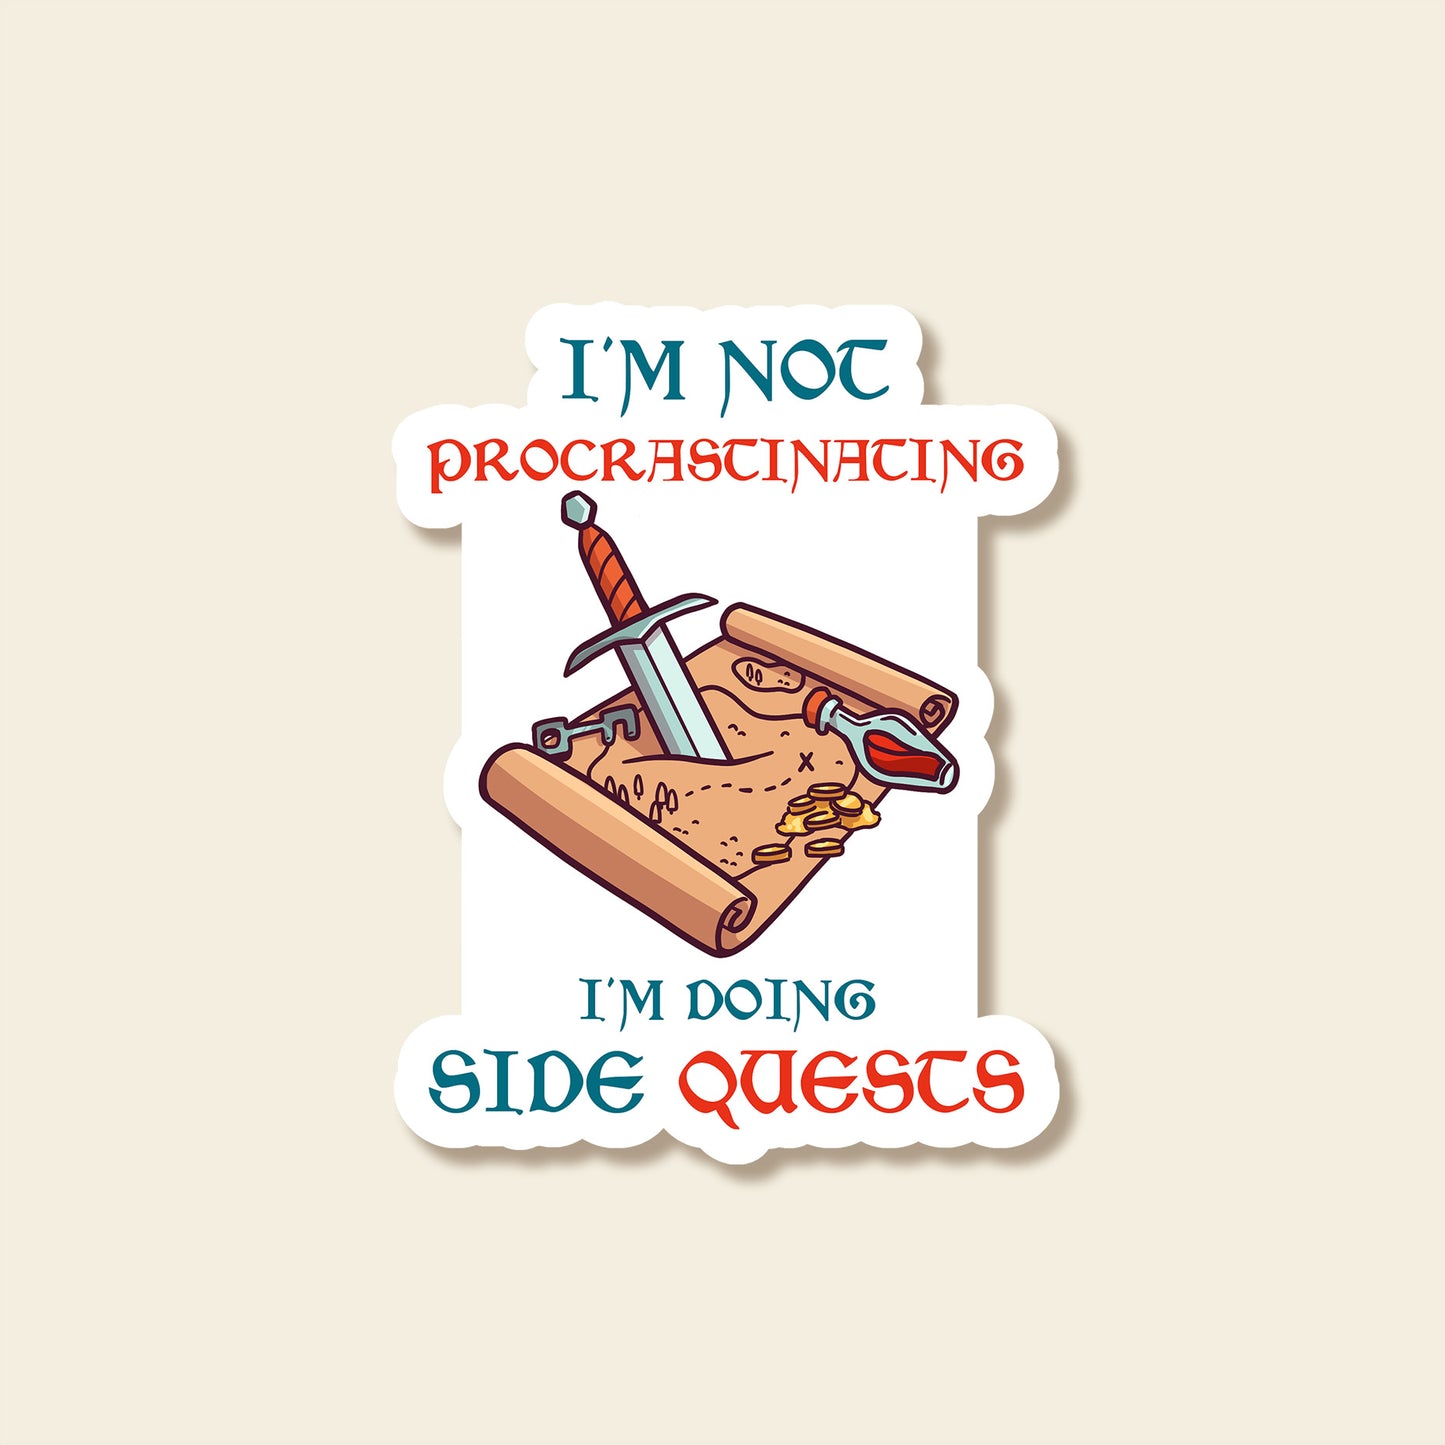 I'm not procrastinating, I'm doing side quests - Sticker